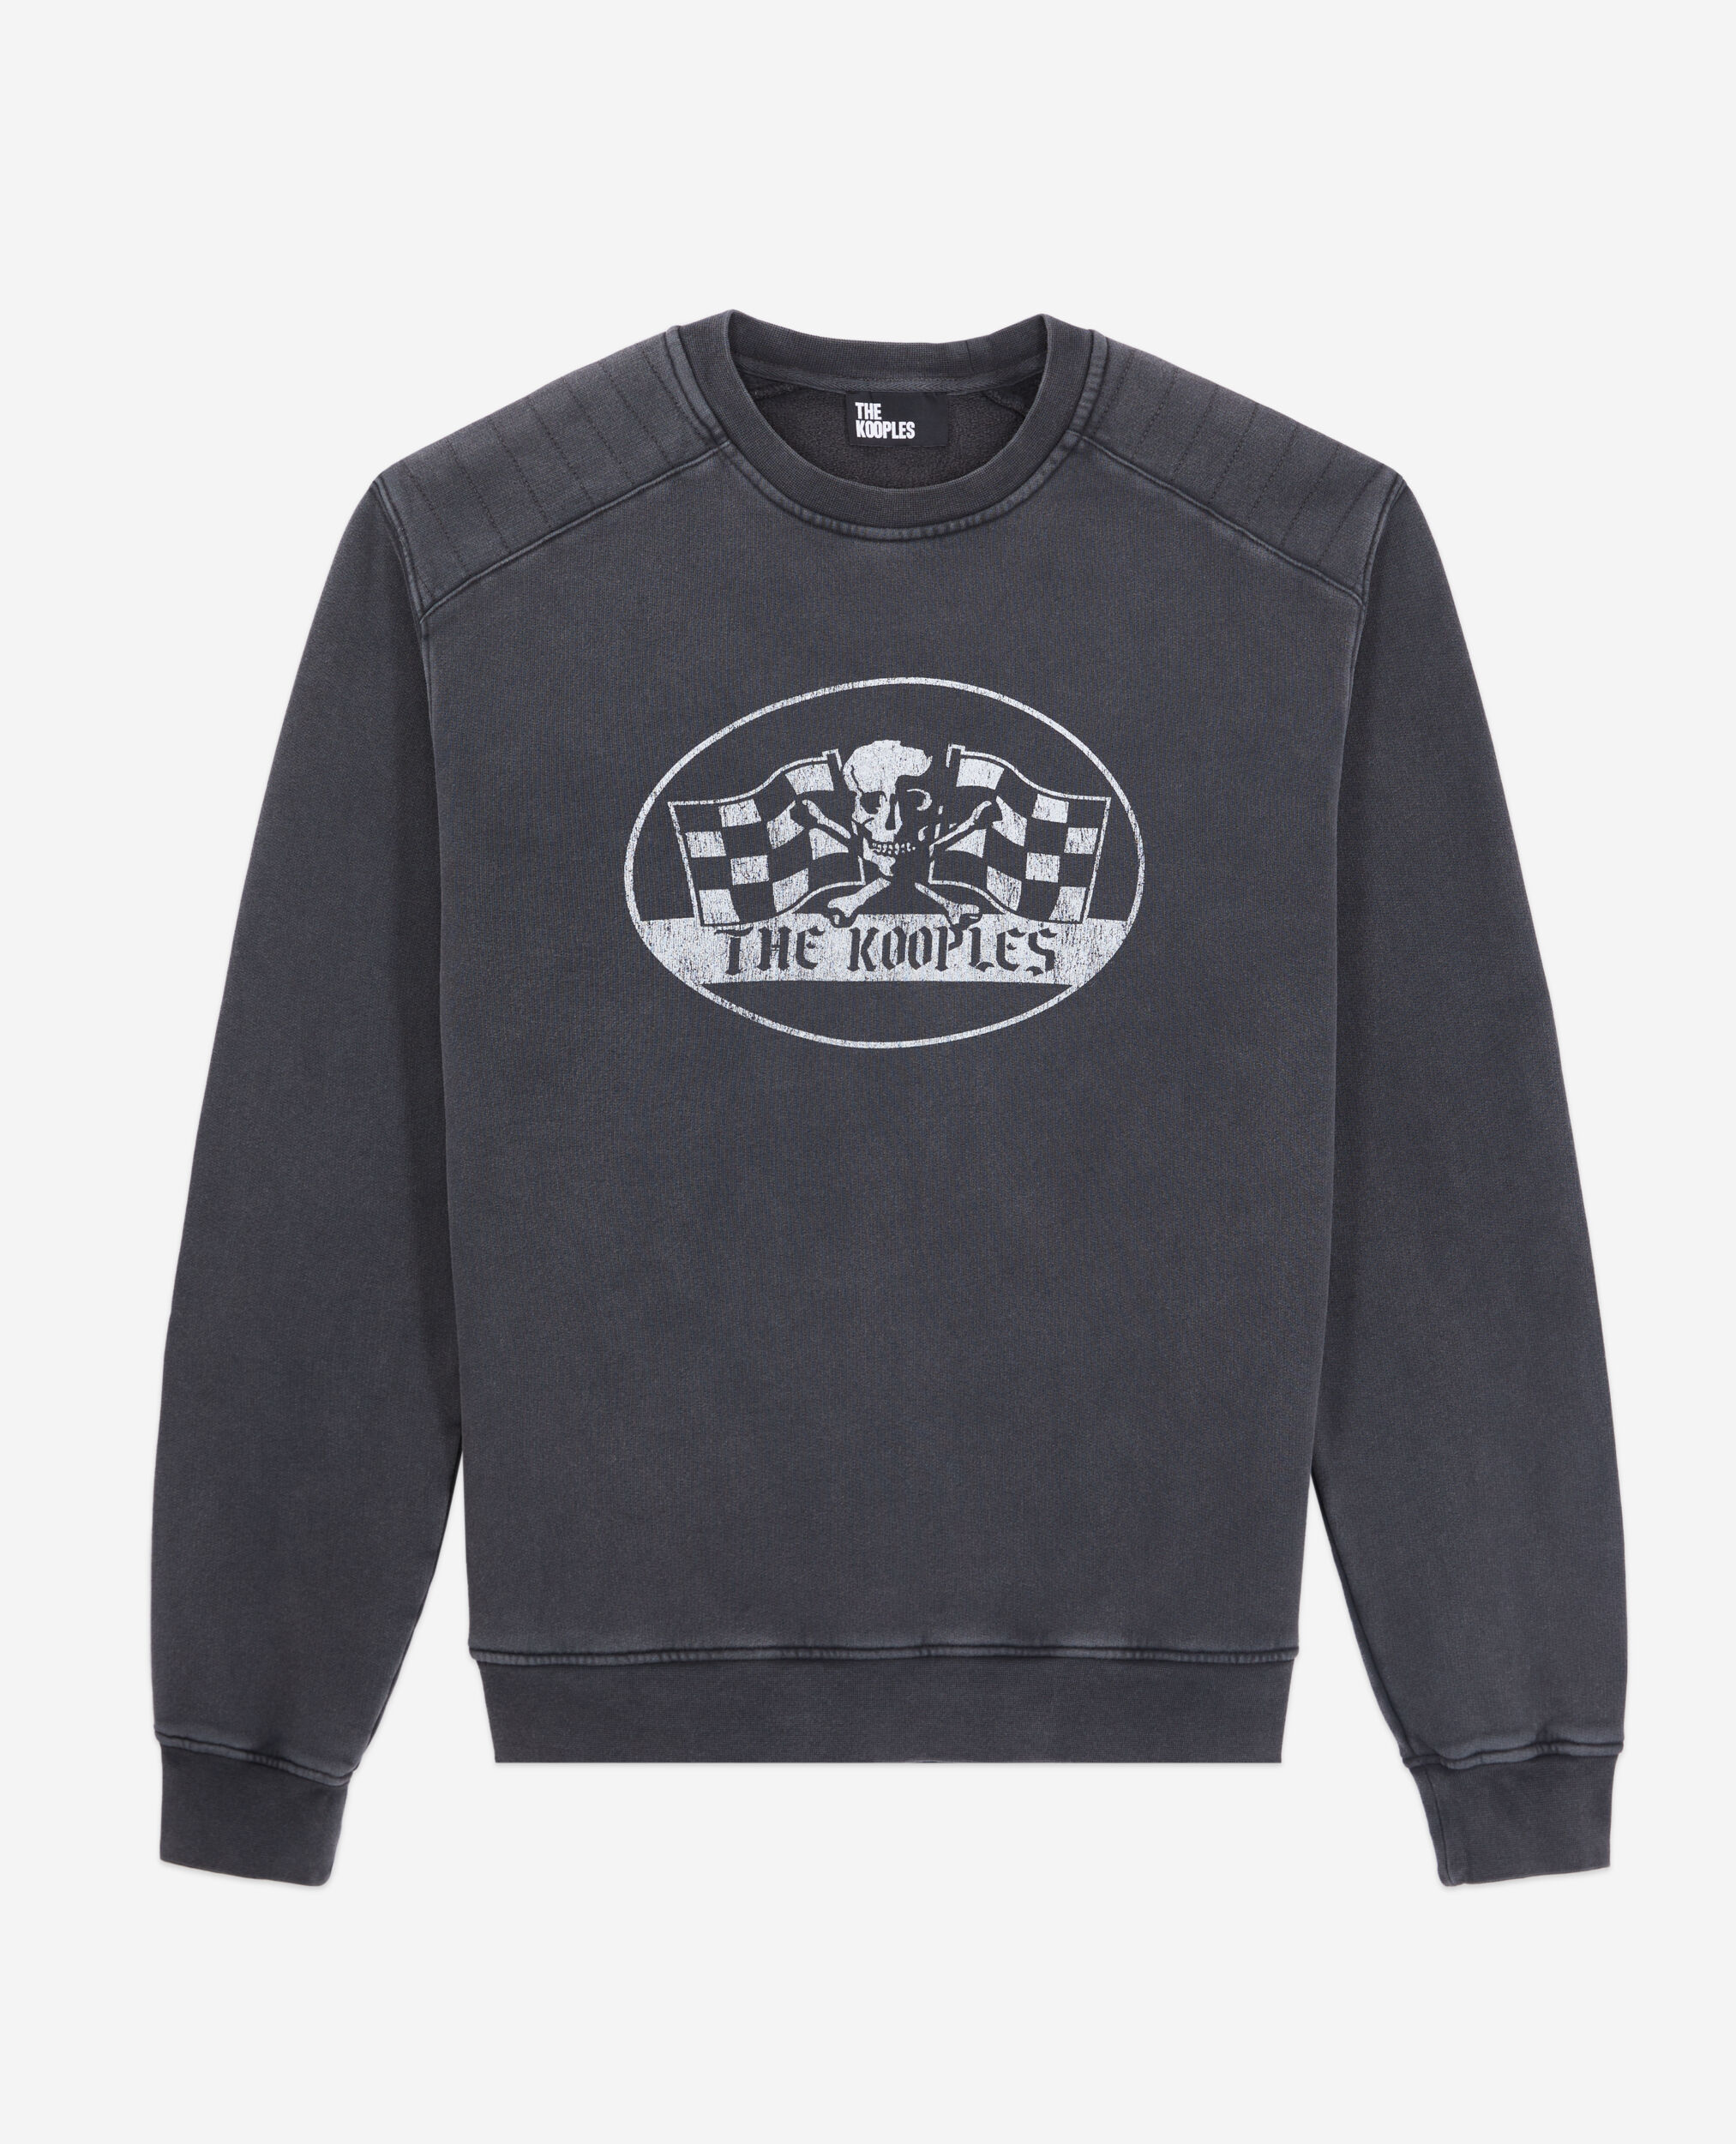 Men's Black sweatshirt with Racing skull serigraphy, BLACK WASHED, hi-res image number null